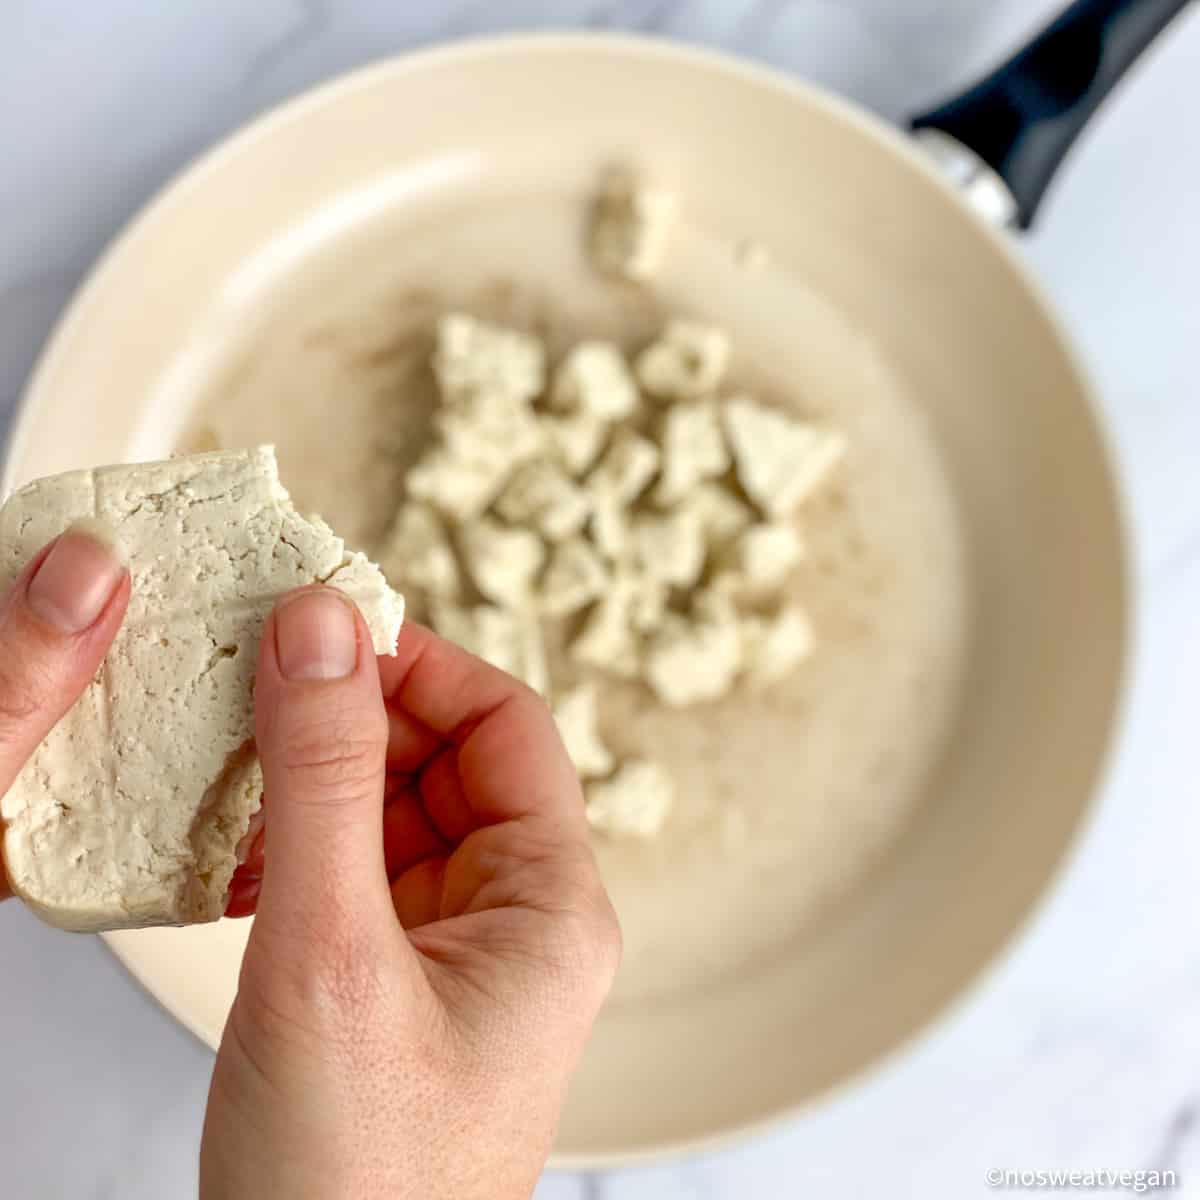 break the tofu into chunks over the skillet